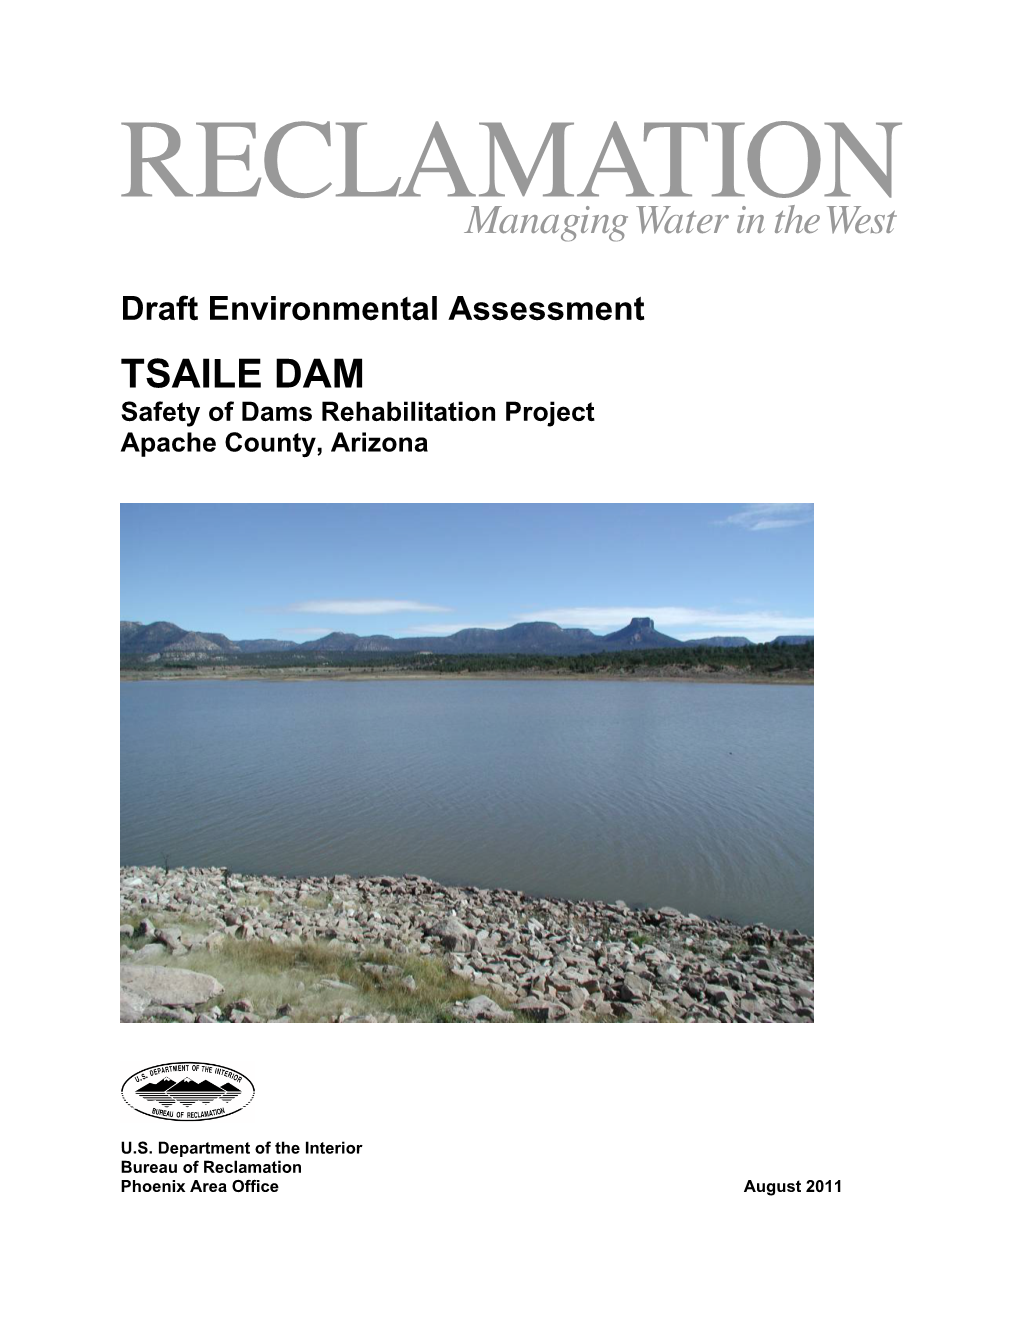 TSAILE DAM Safety of Dams Rehabilitation Project Apache County, Arizona